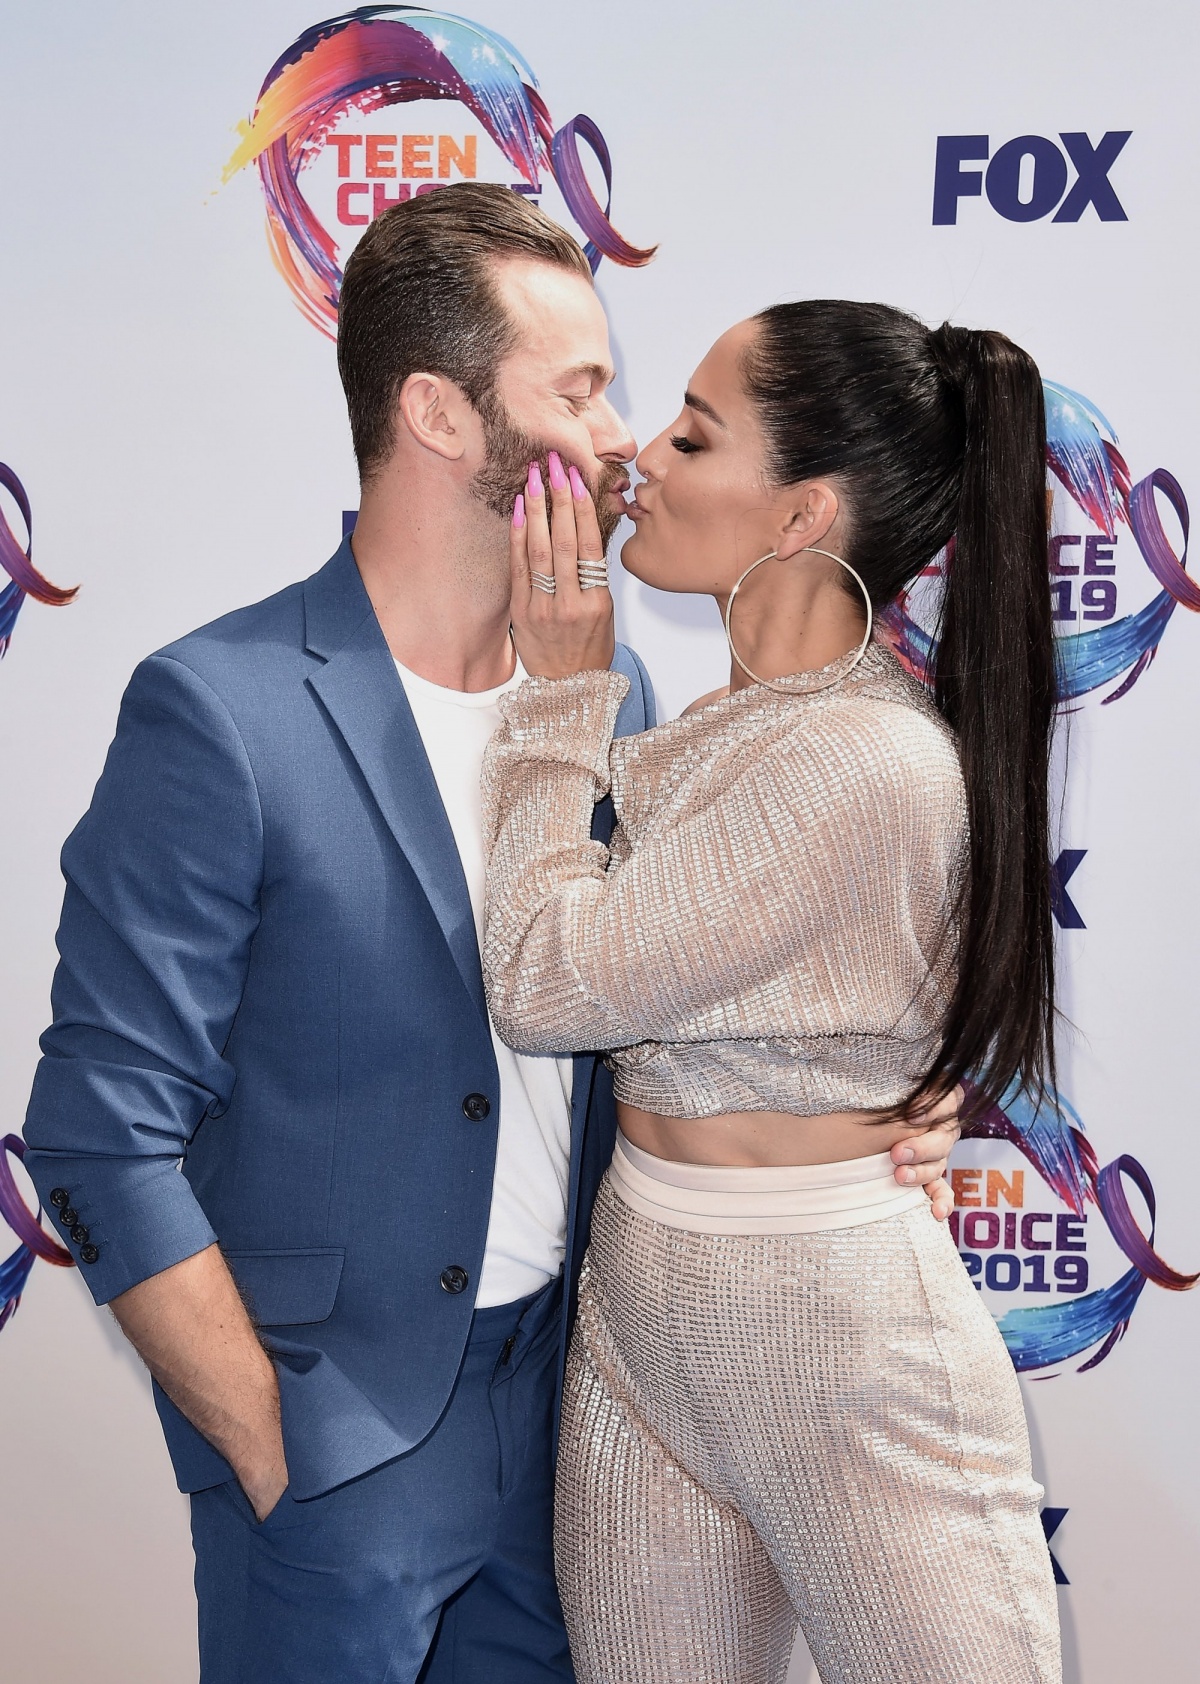 Nikki Bella and Artem Chigvintsev attend Teen Choice Awards together - Reality TV World